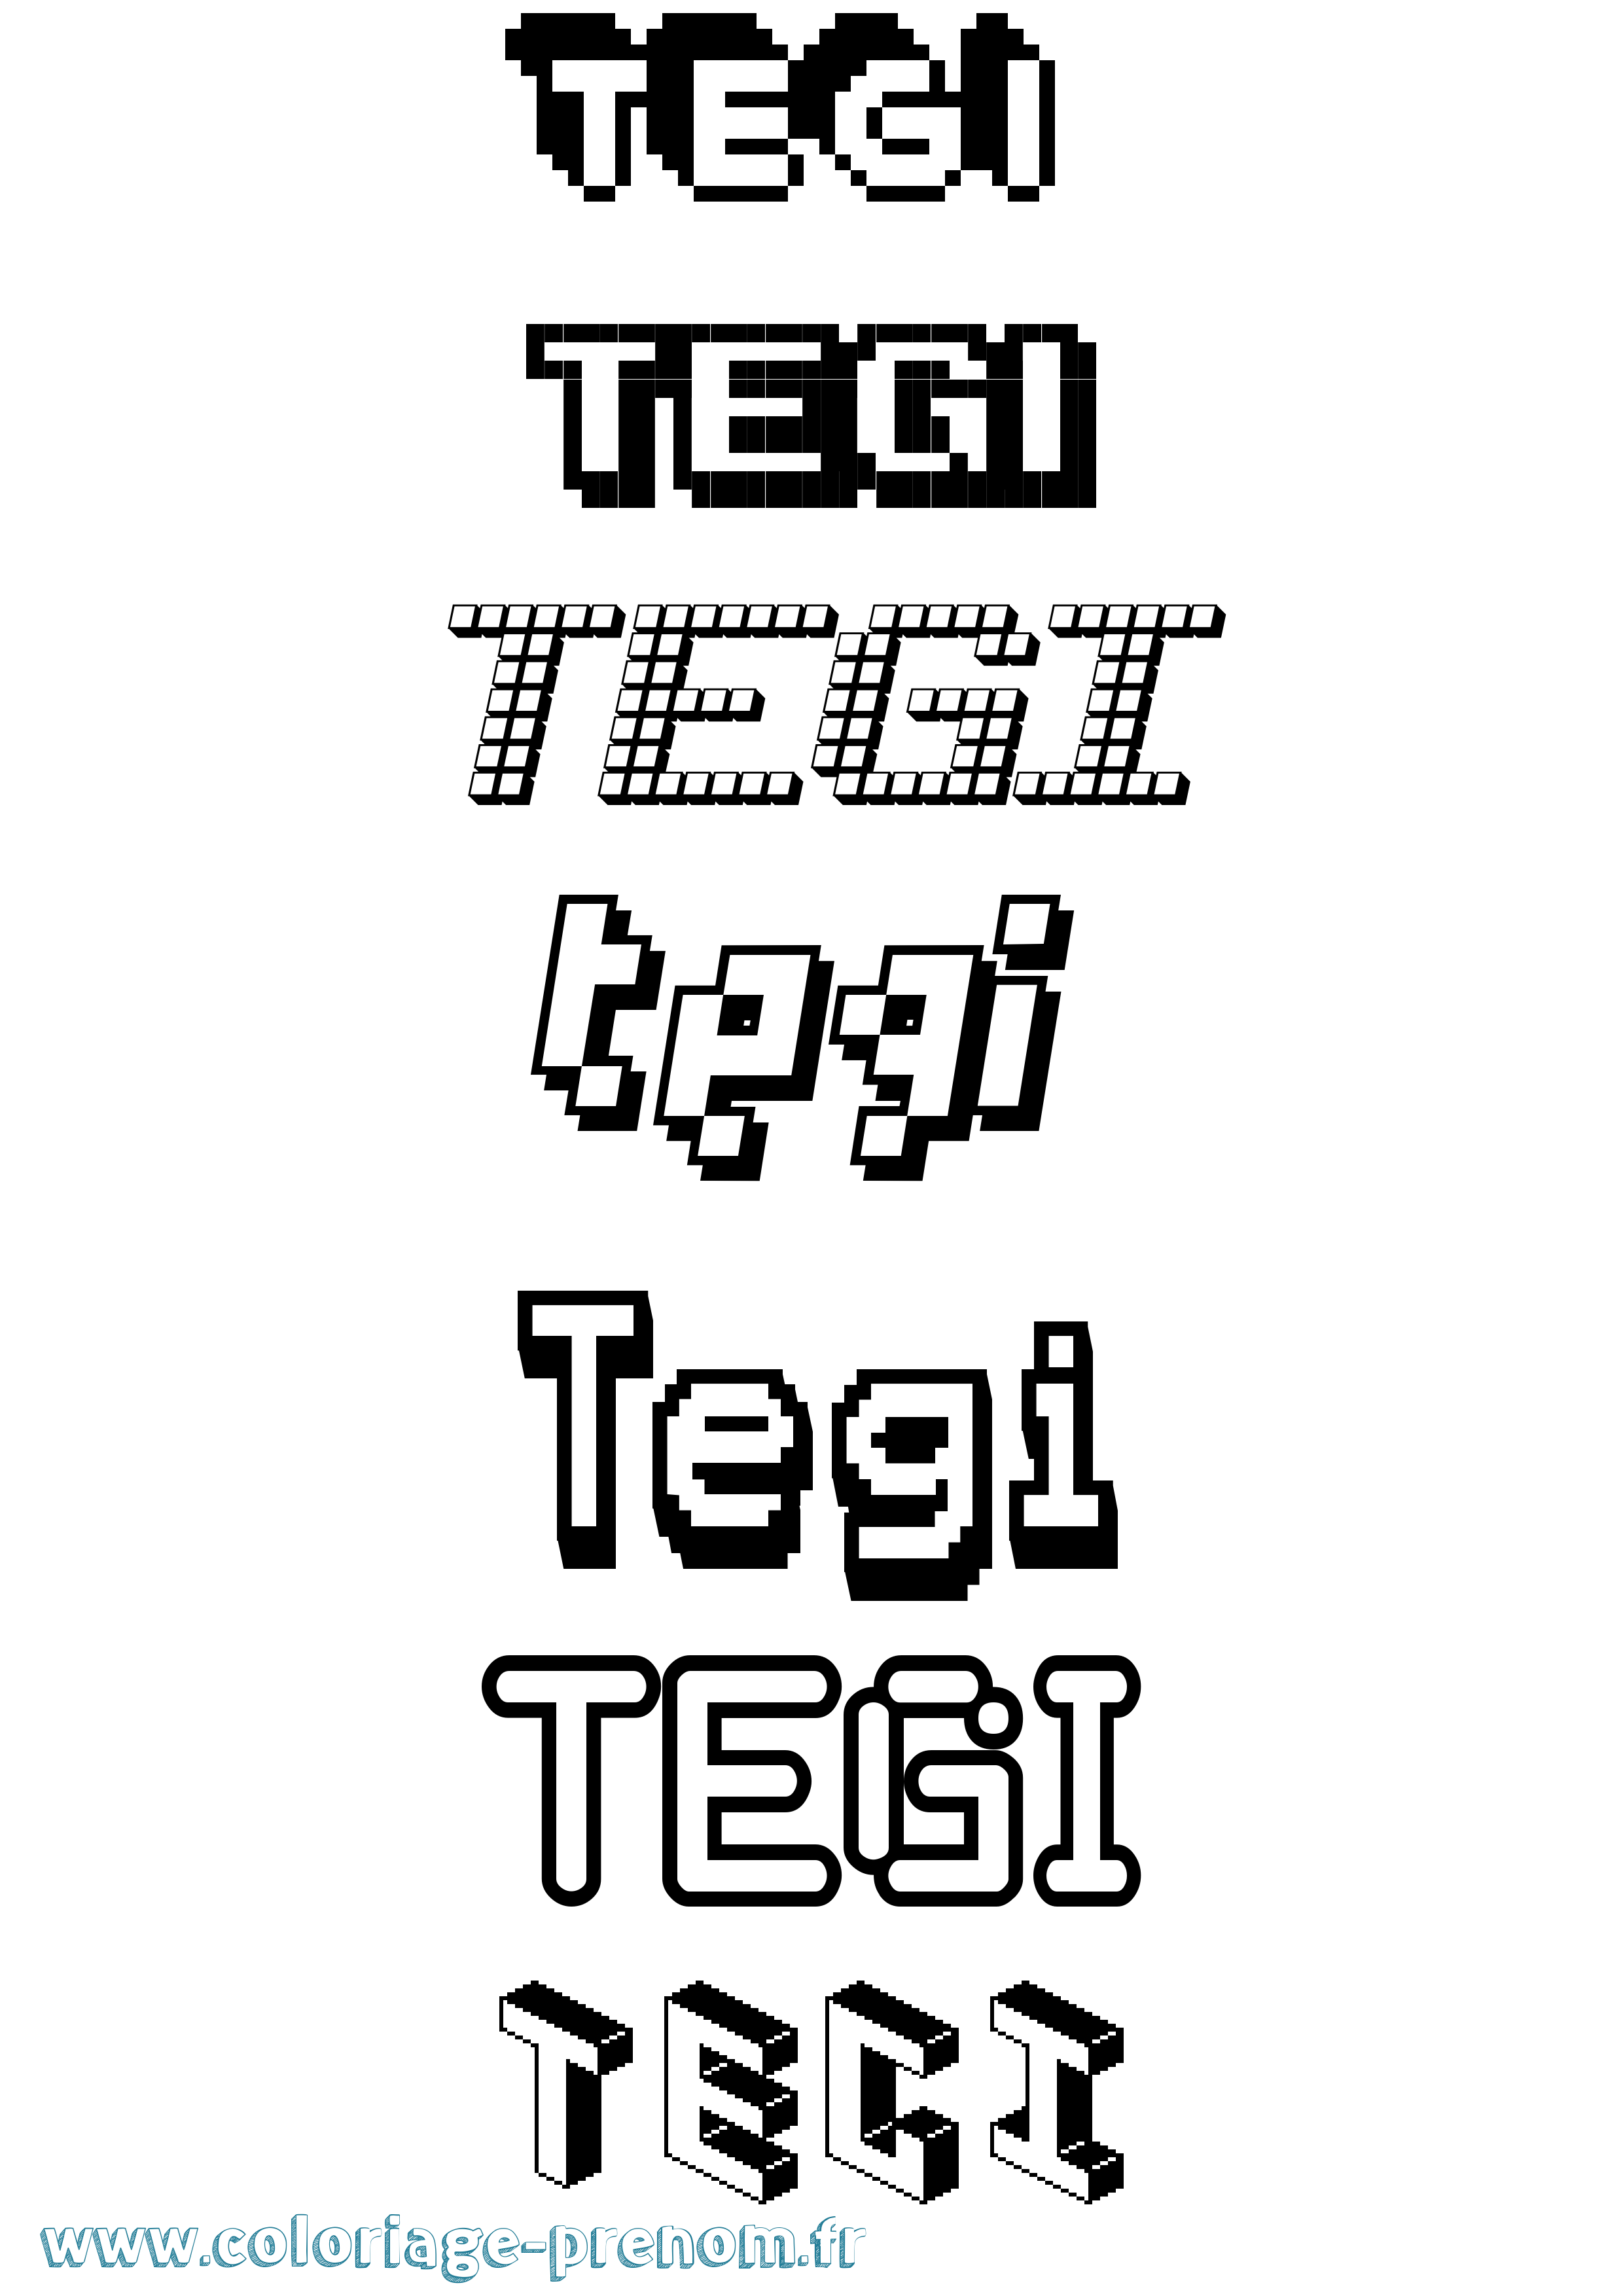 Coloriage prénom Tegi Pixel